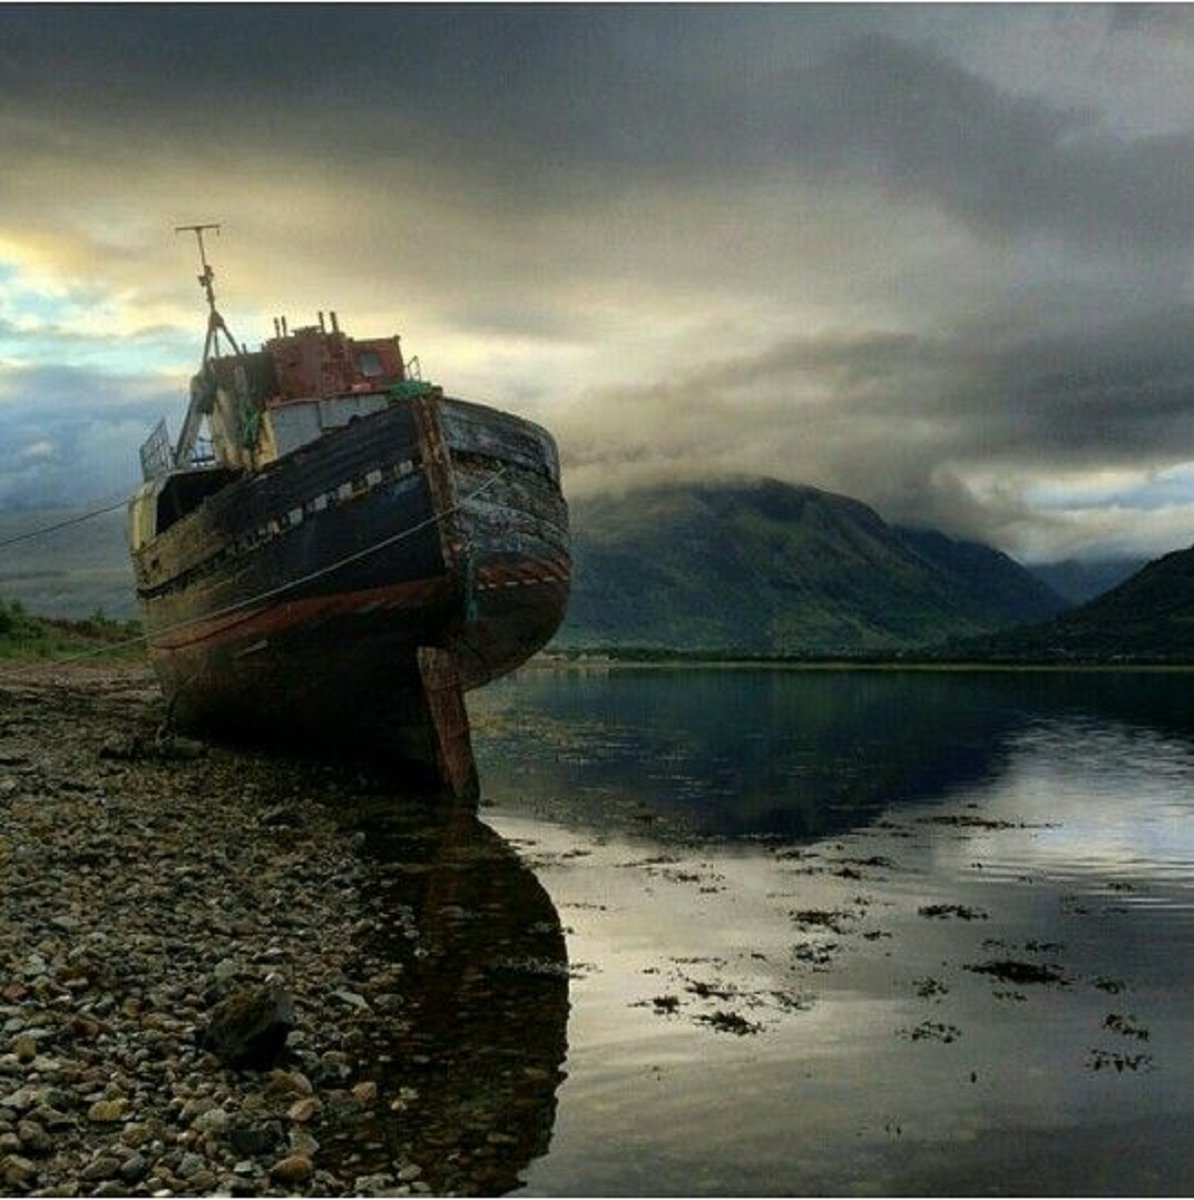 Boat on the rocks of Loch Linnhe, Scotland. NMP.